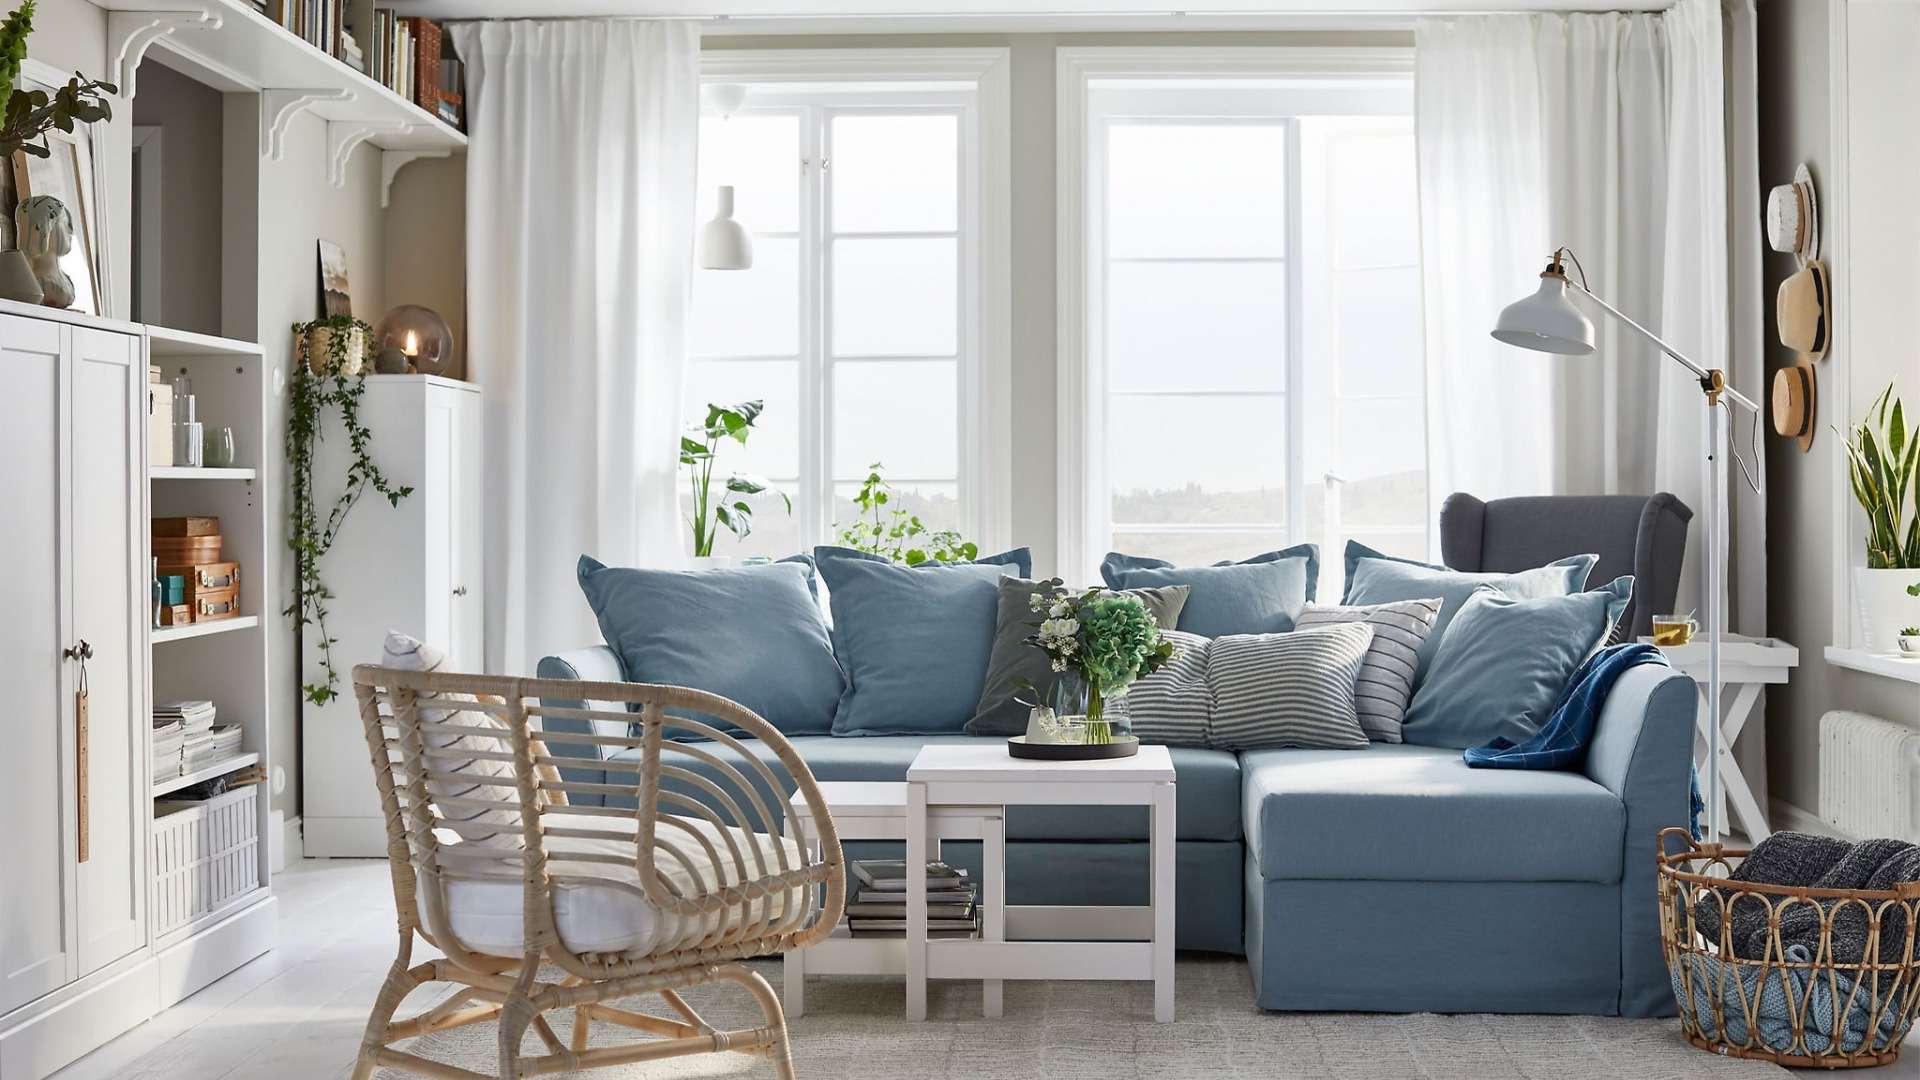 08 Salon moderno decorado con muebles de estilo Ikea